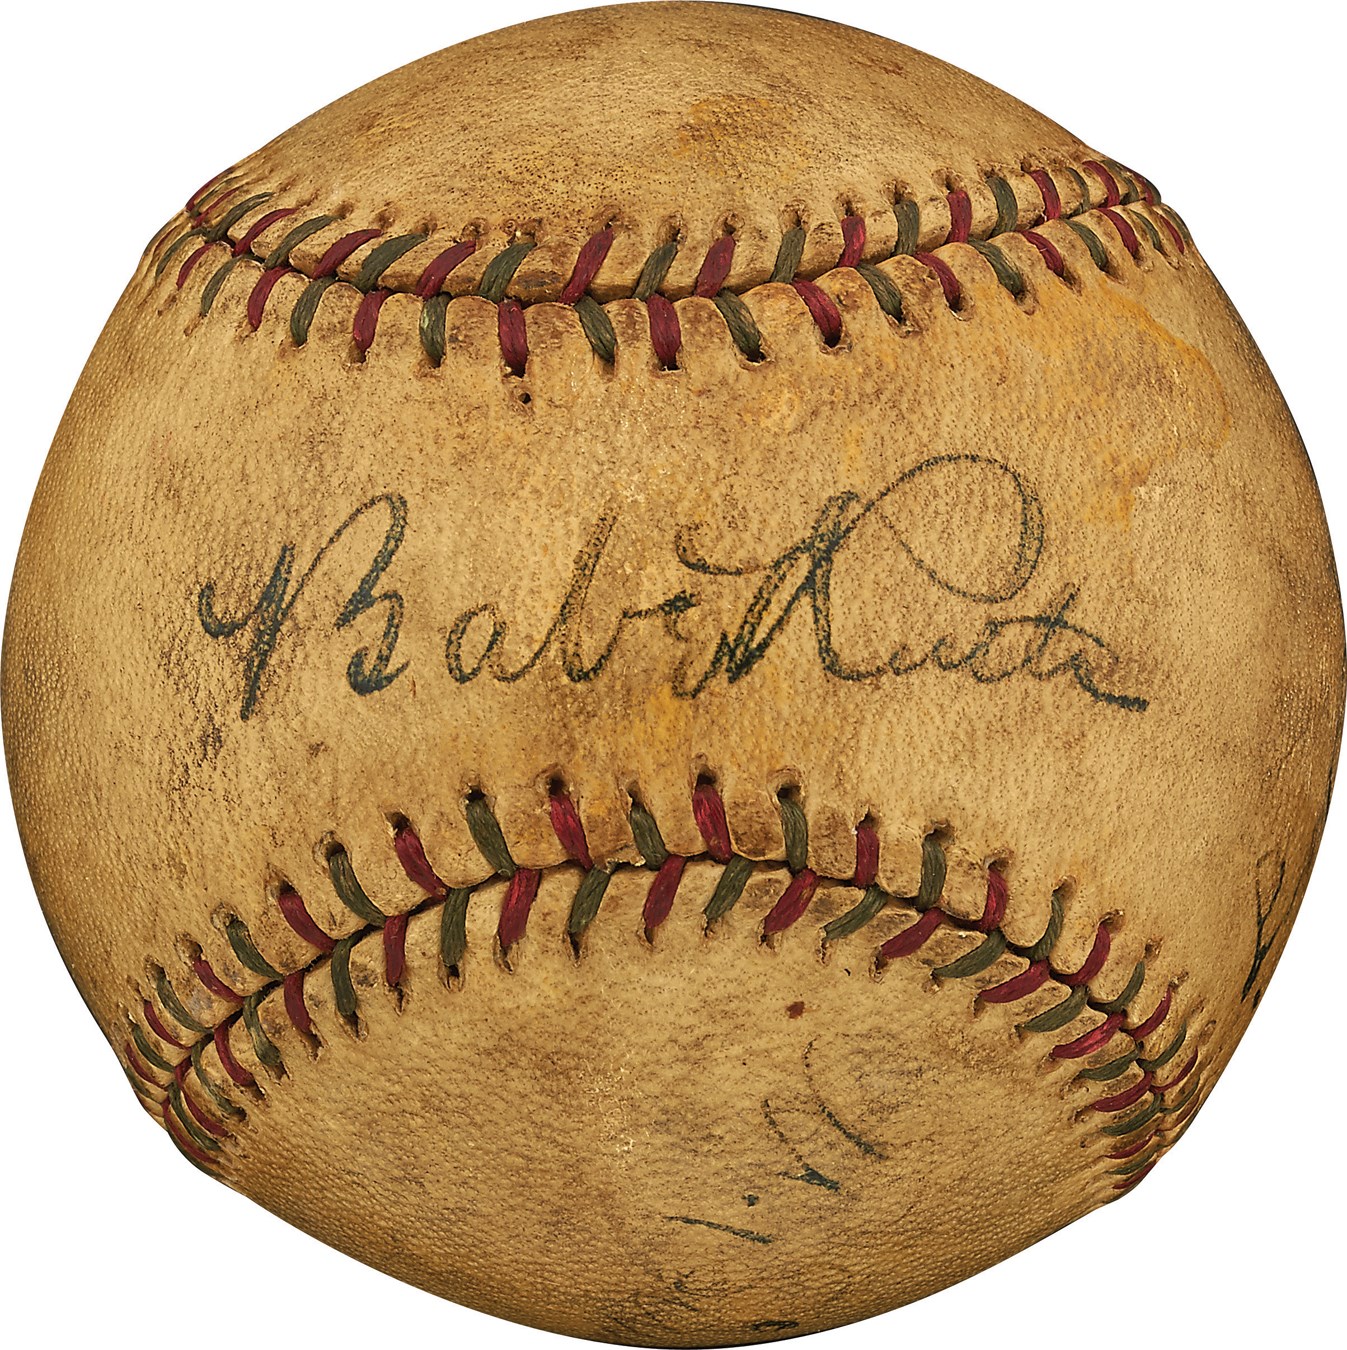 1928 Babe Ruth, Lou Gehrig & Al Simmons Signed Baseball (PSA)